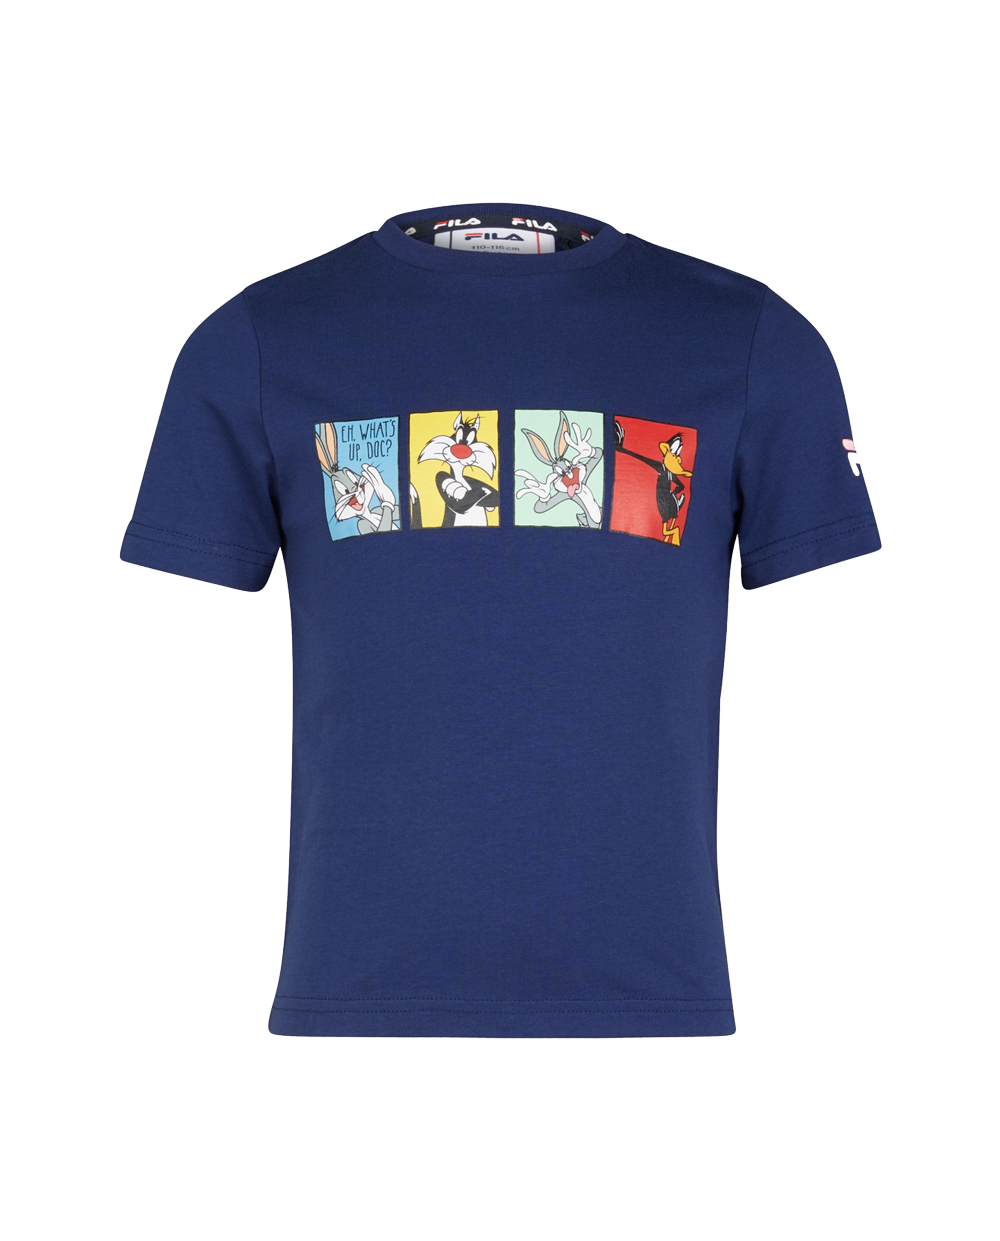 T-Shirt Fila Azul Marinho Looney Tunes